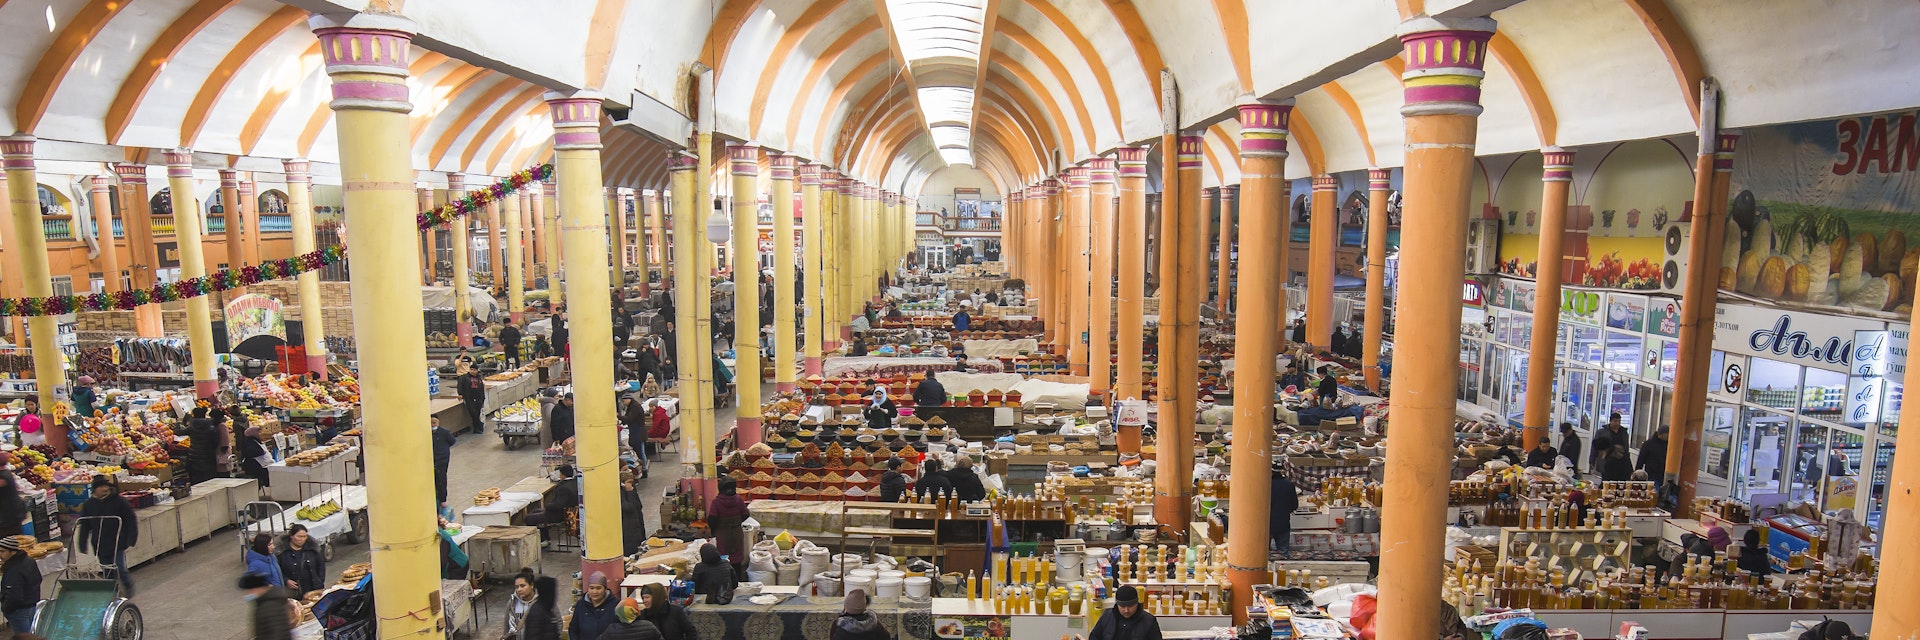 The interior of Panjshanbe market in Khujand, Tajikstan.